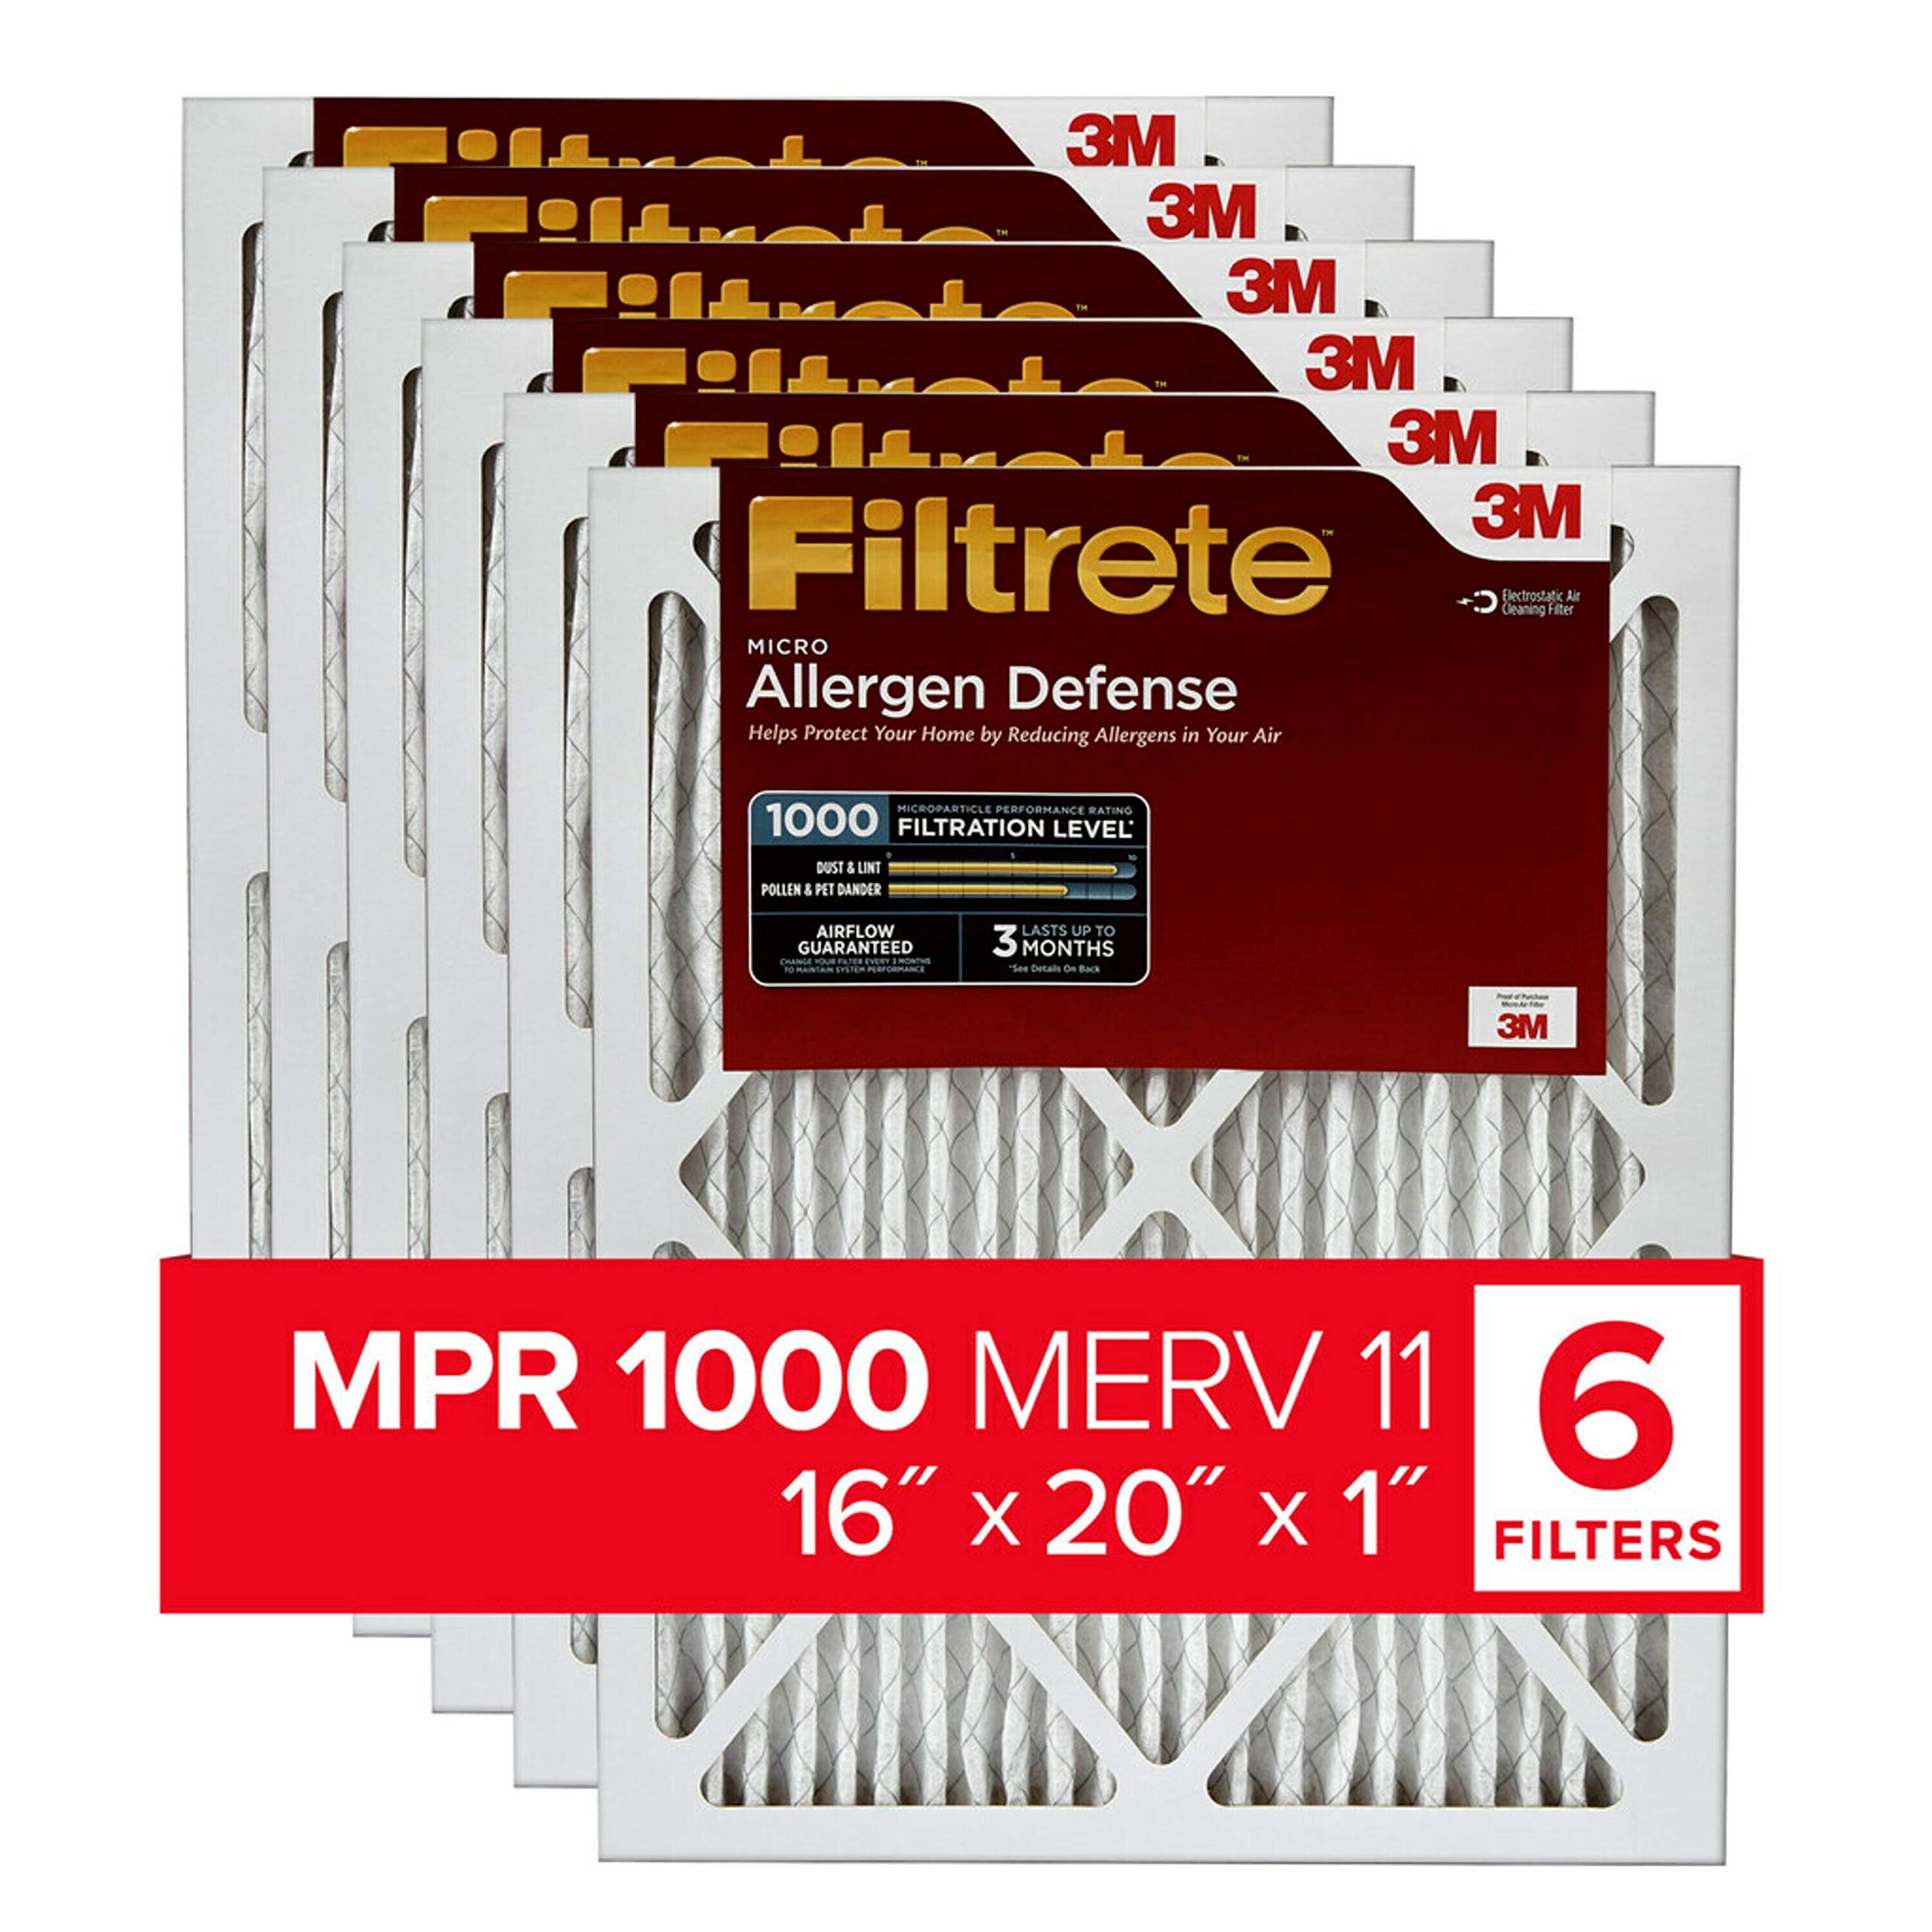 Filtrete 16x20x1 Air Filter MPR 1000 MERV 11, Allergen Defense, 6-Pack (exact dimensions 15.69x19.69x0.81)